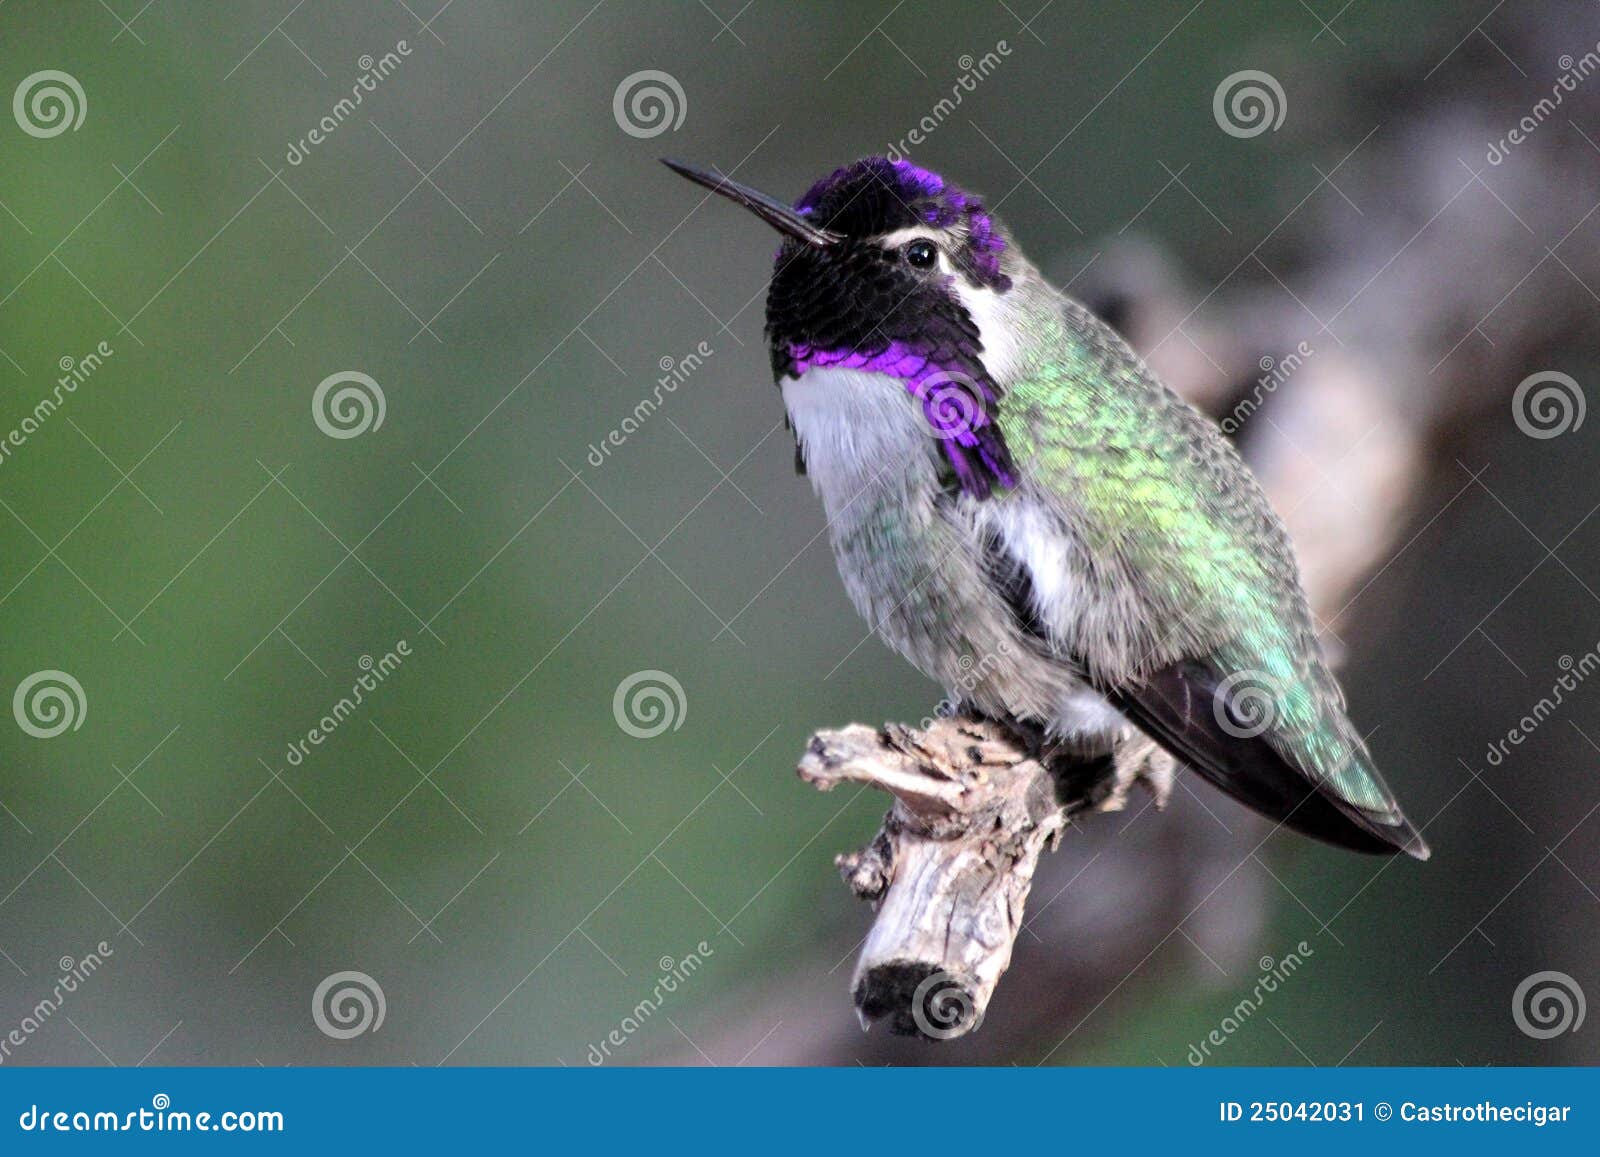 costa's hummingbird iridescence